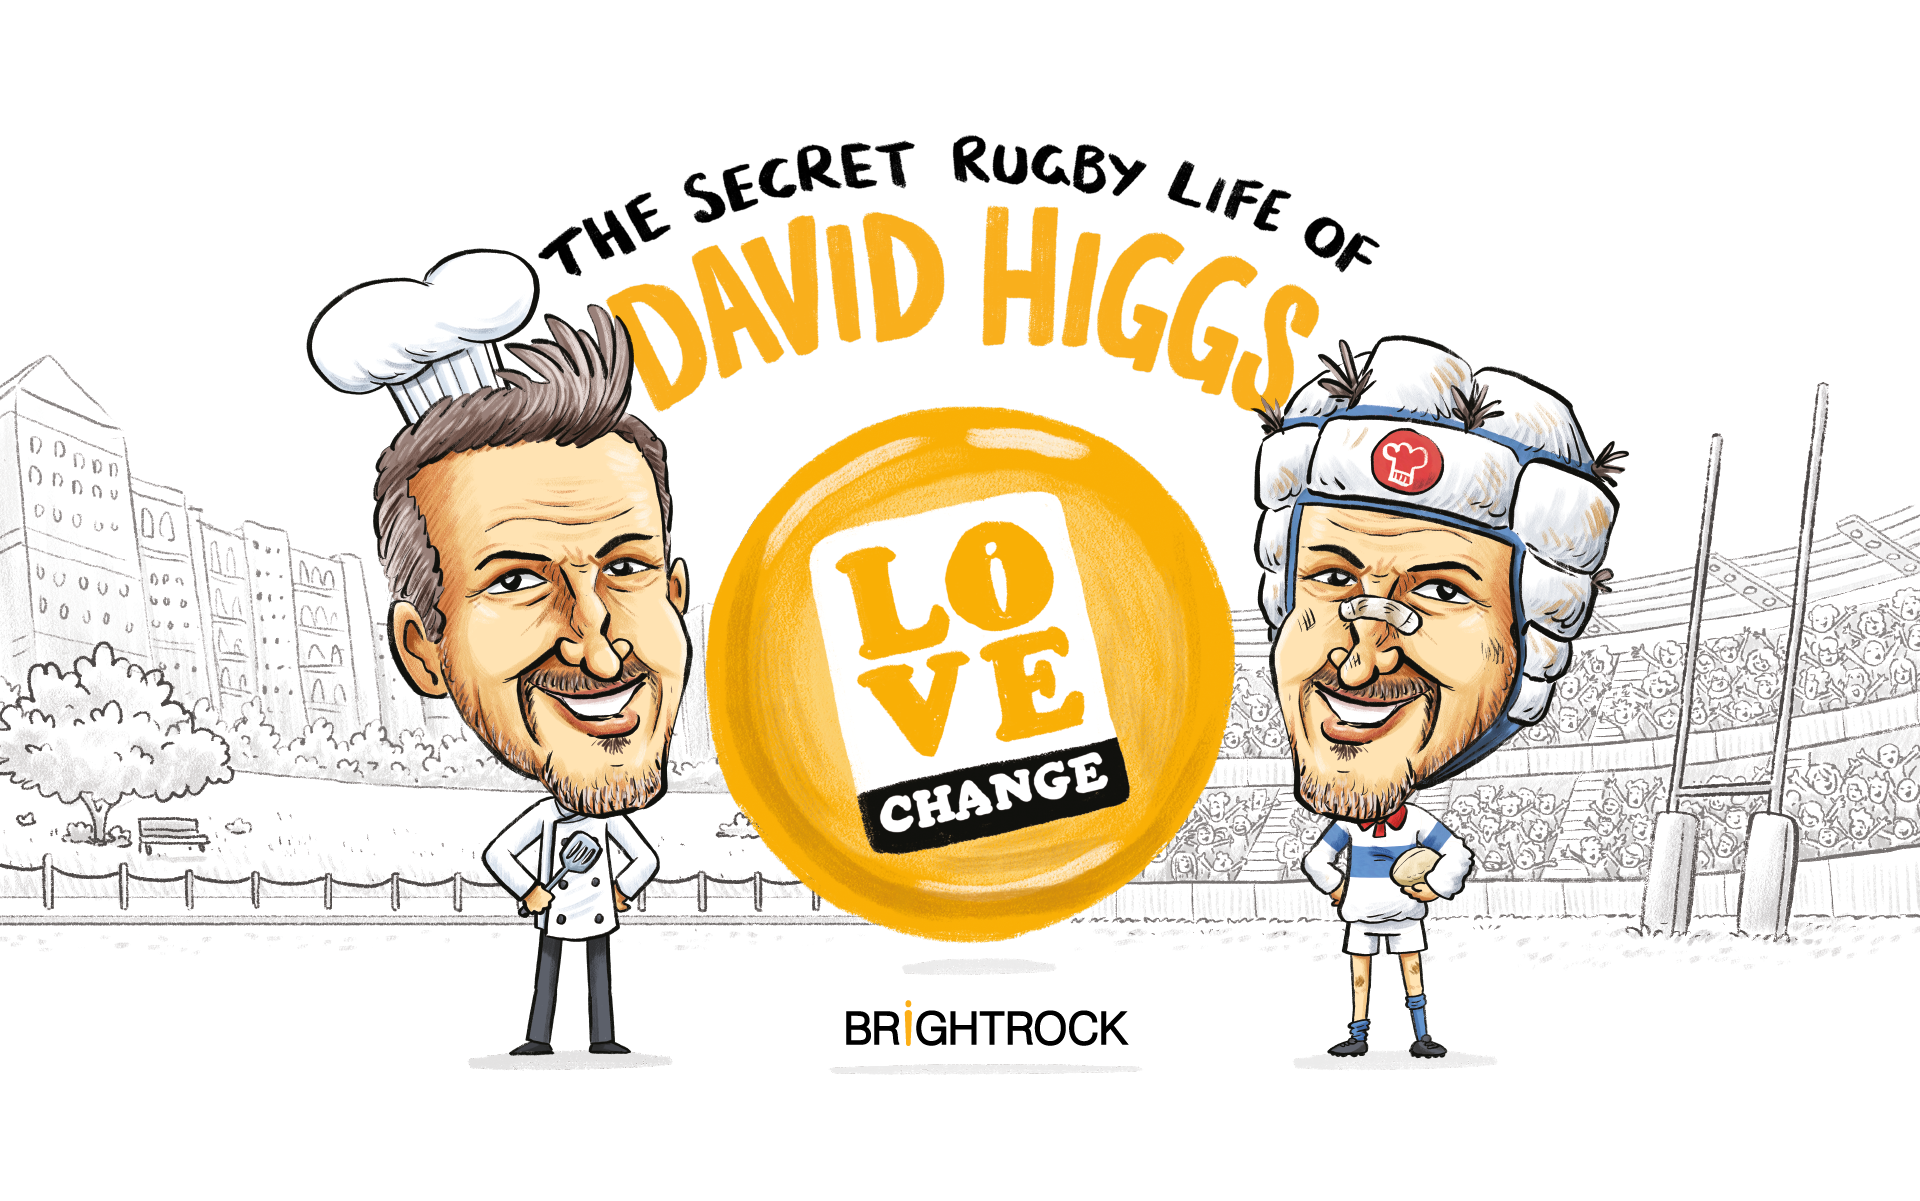 Secret rugby life of David Higgs